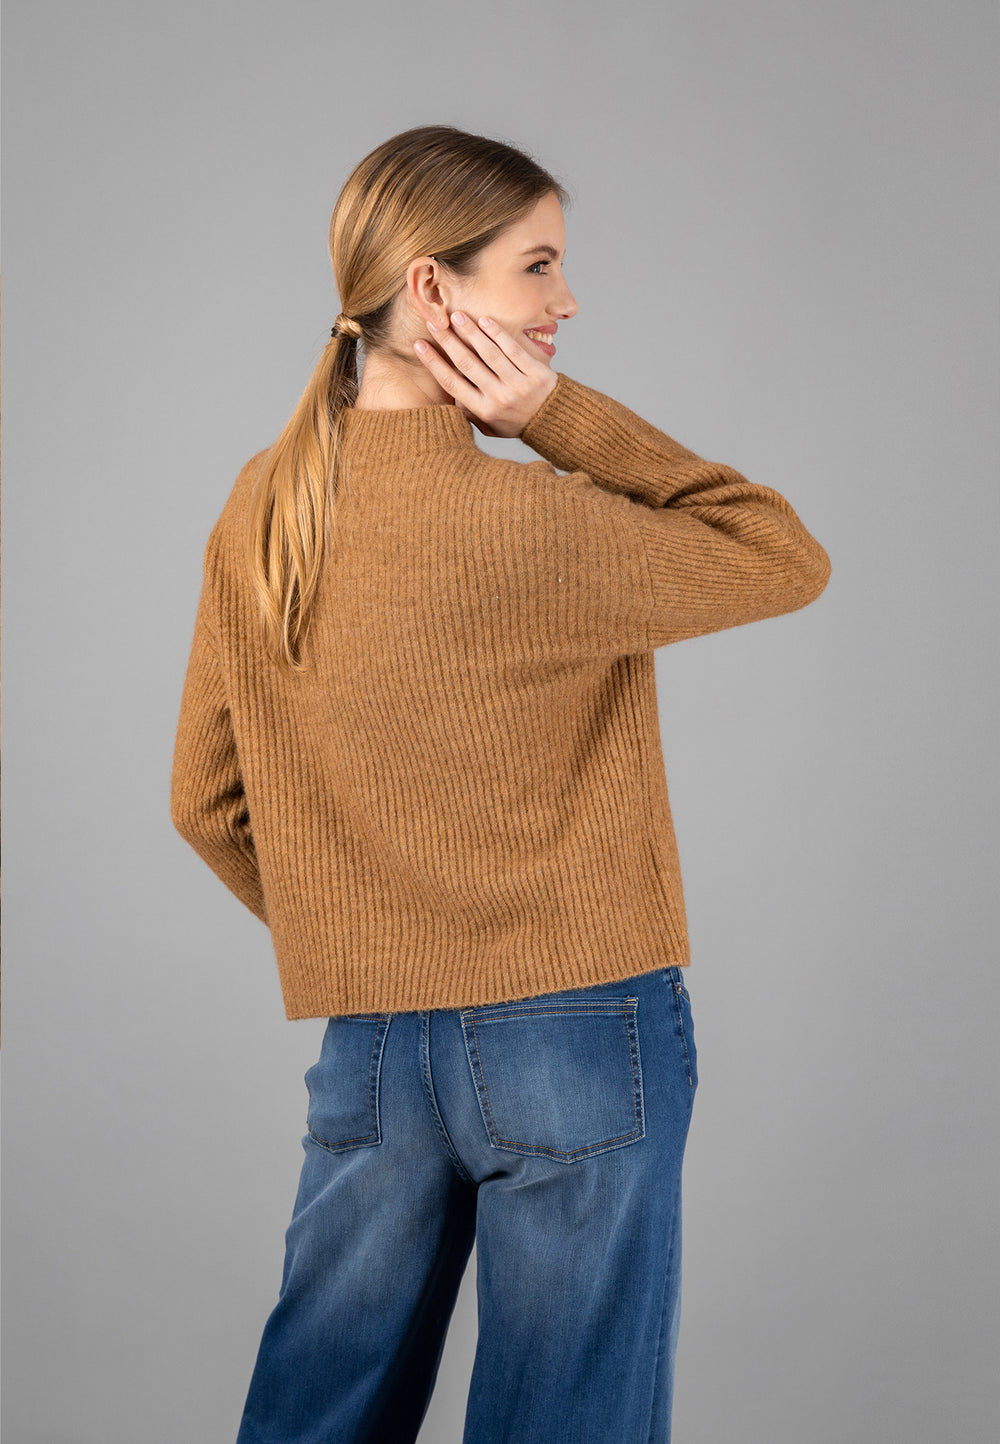 Shop Ladies Shop – & Official Online Cardigans | Fynch-Hatton HATTON Offizieller Sweaters | FYNCH- Online